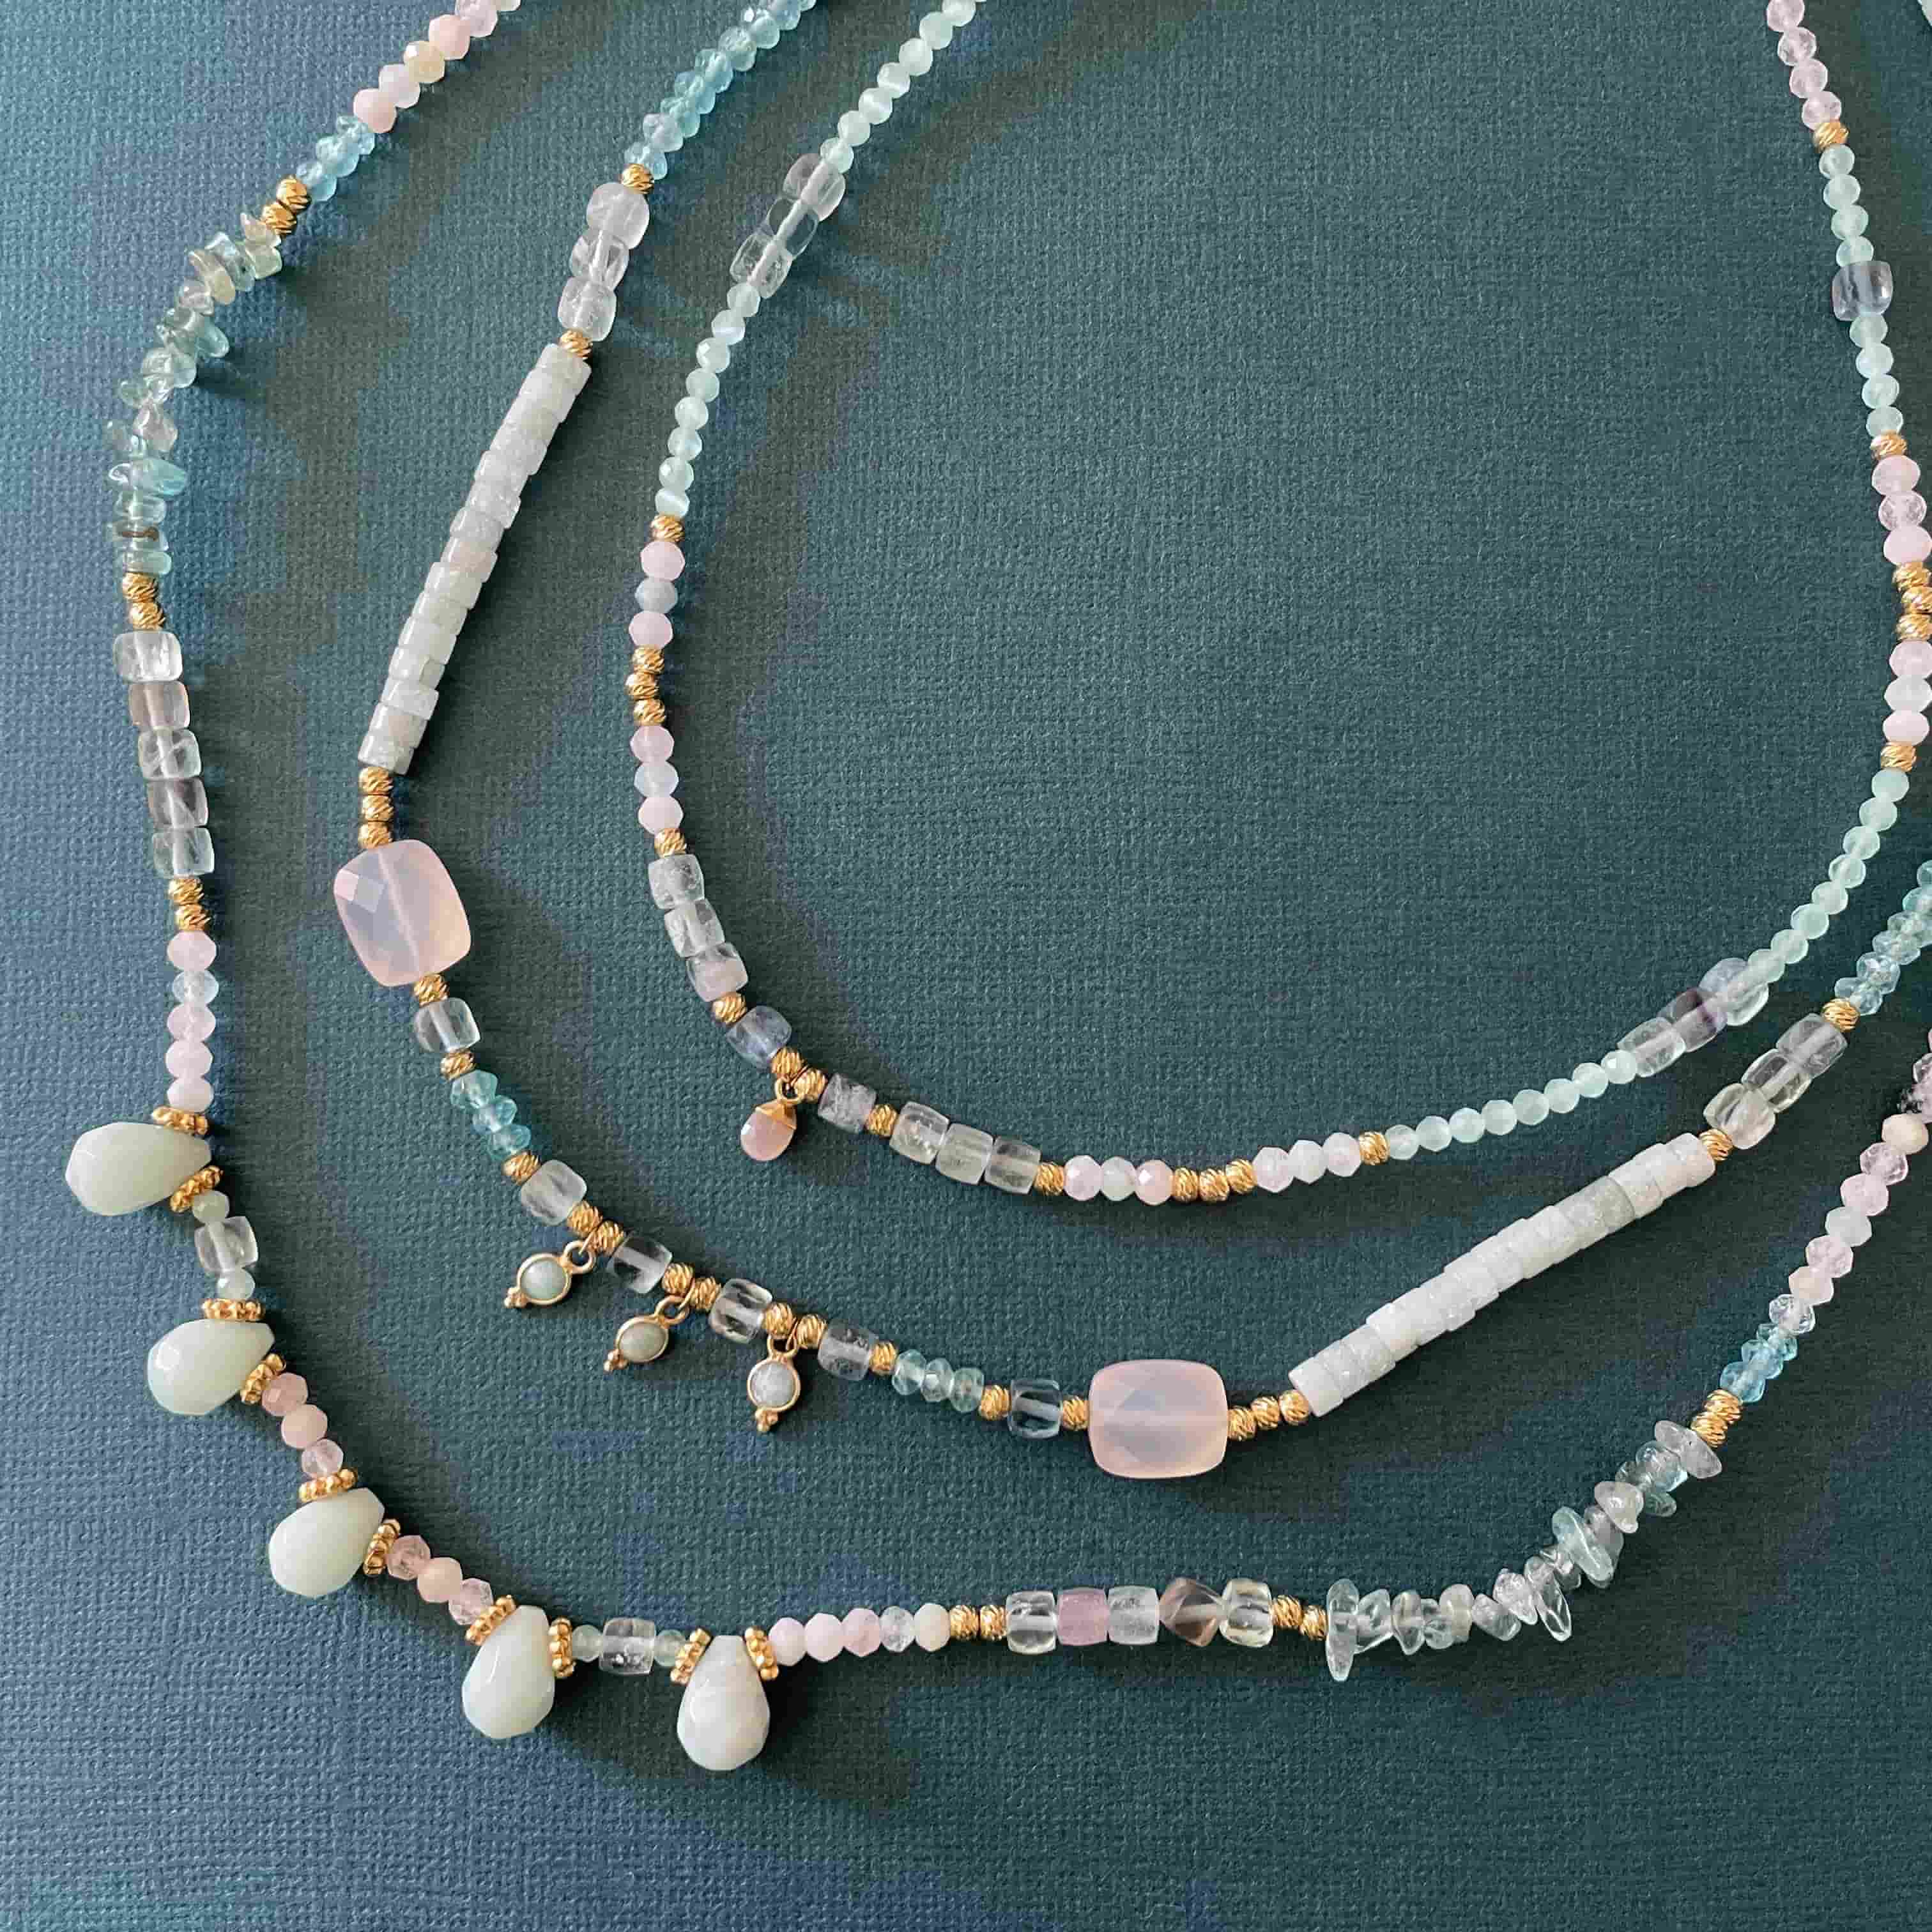 Les Poetises - trio de colliers - accumulation - pierres semi precieuses - or fin - bijoux de creatrice